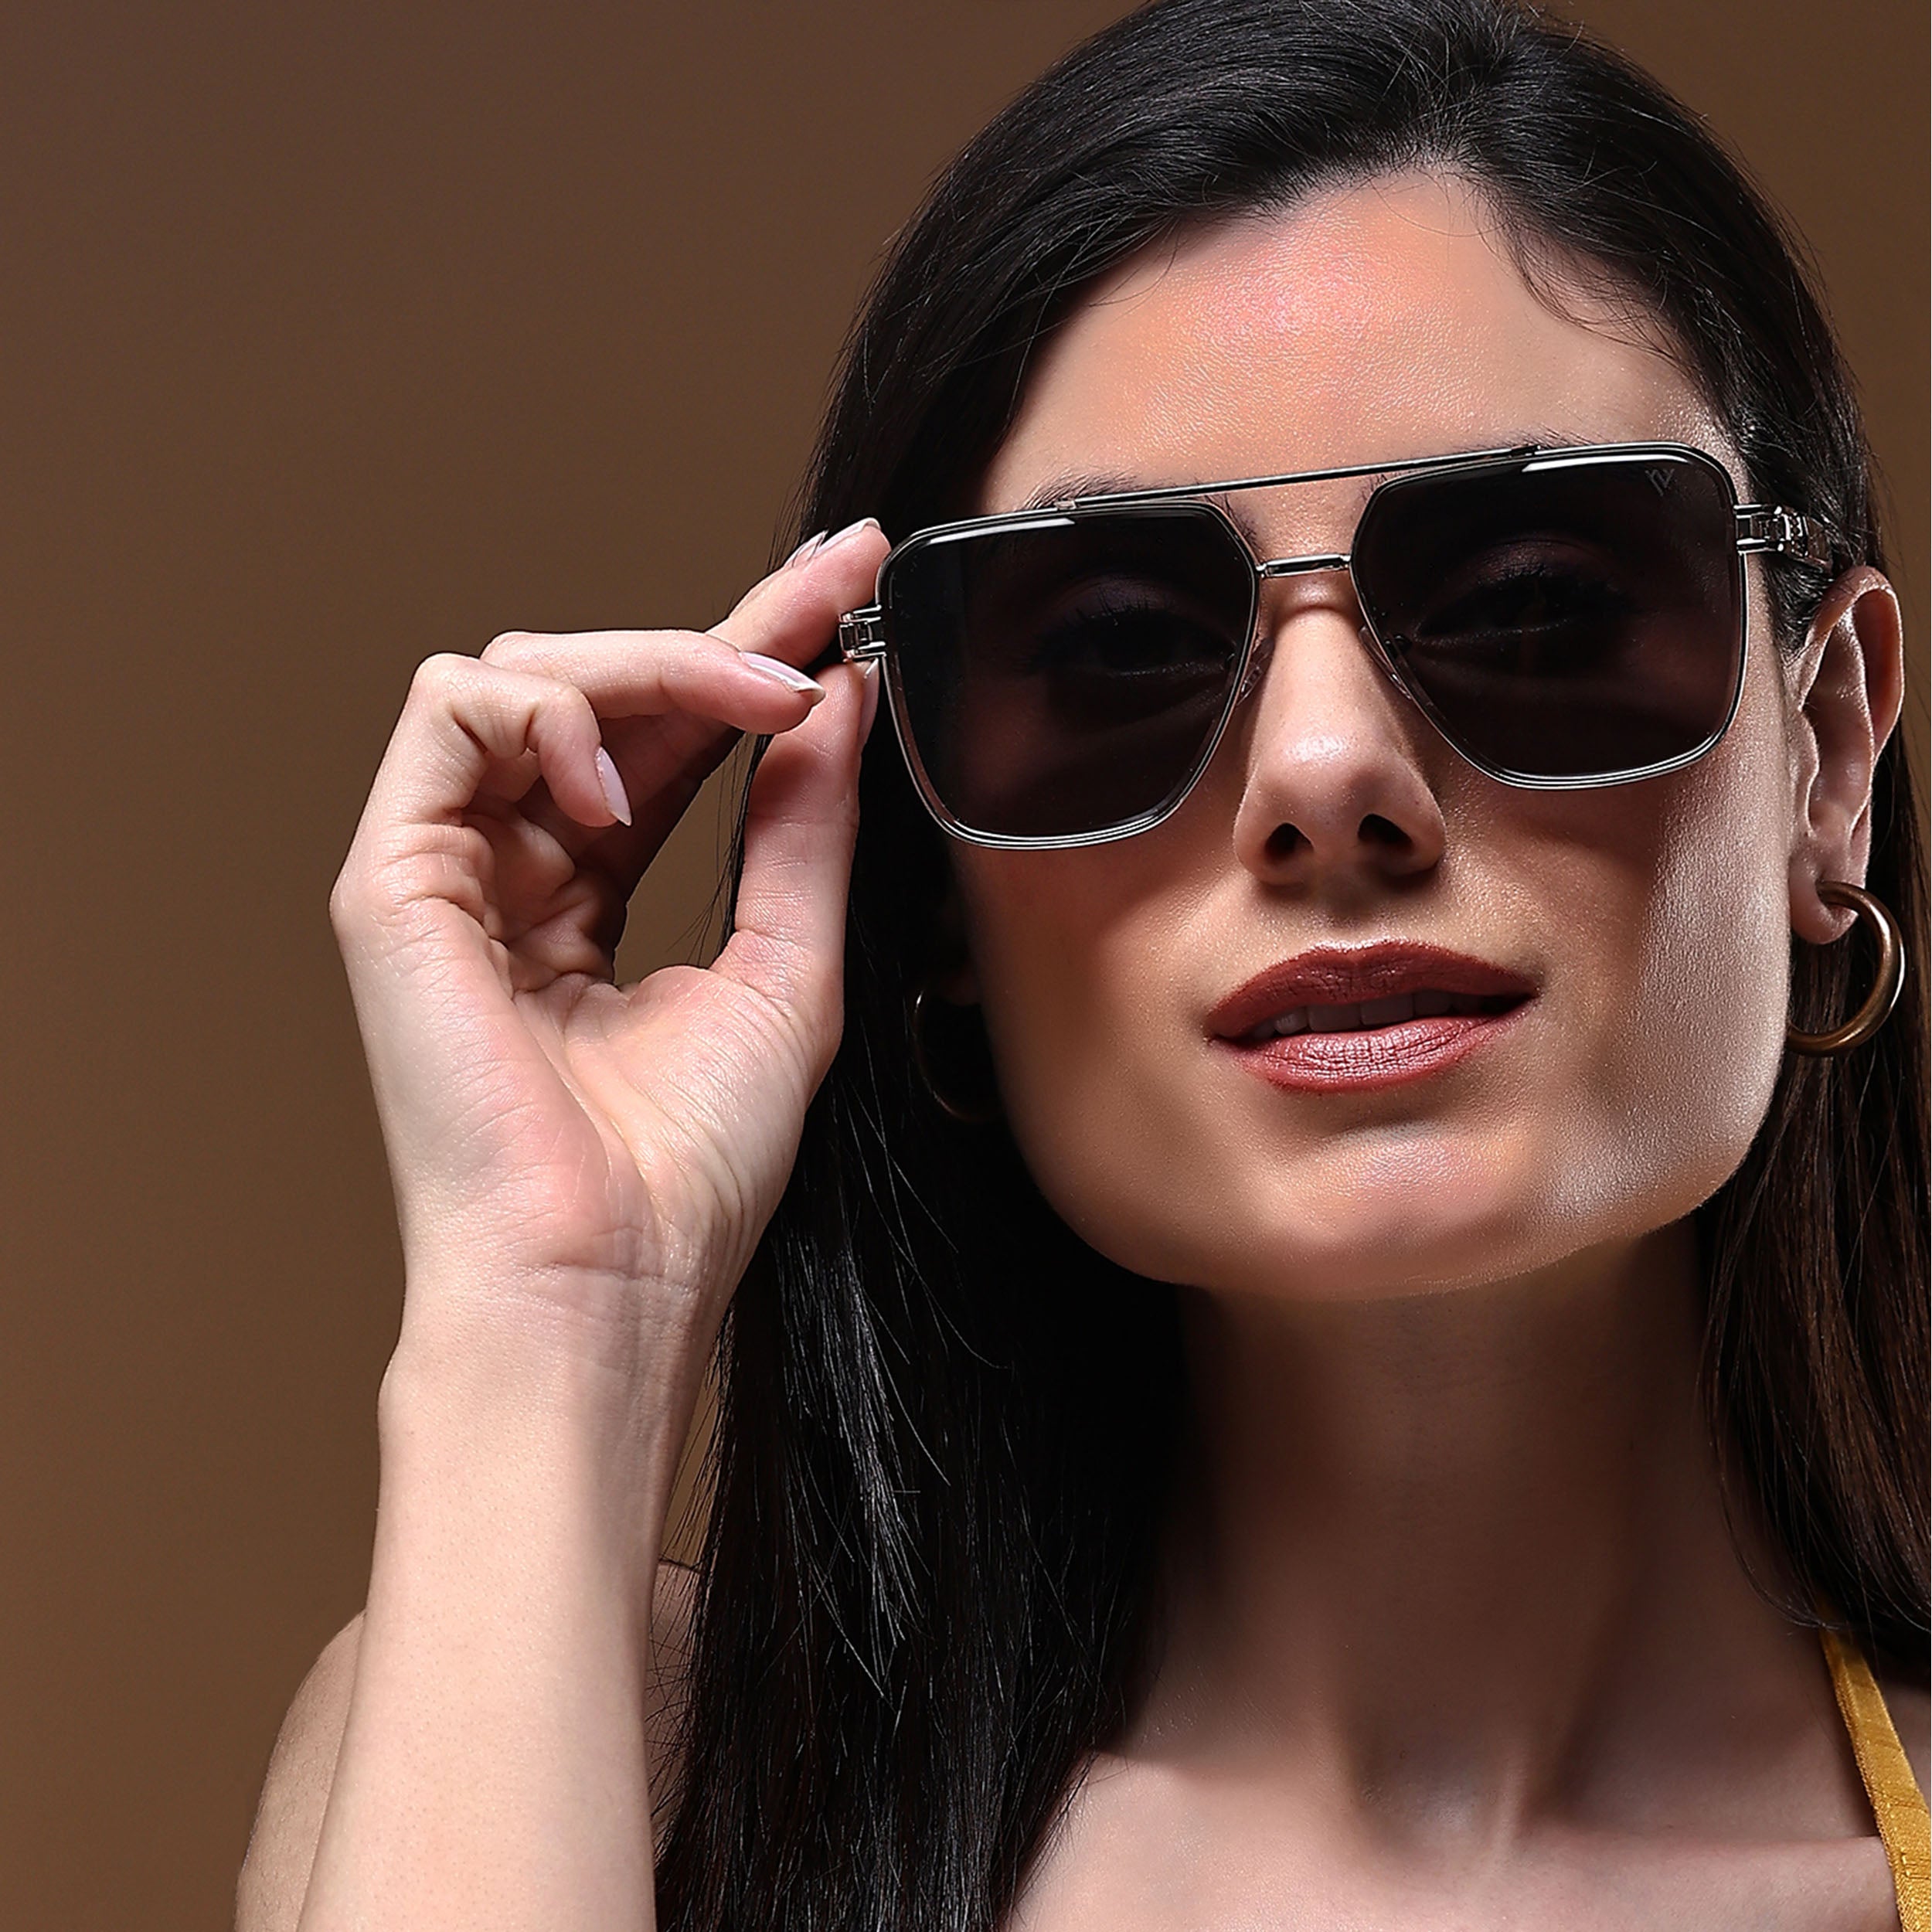 Voyage Wayfarer Sunglasses for Men & Women (Grey Lens | Silver Frame - MG5235)